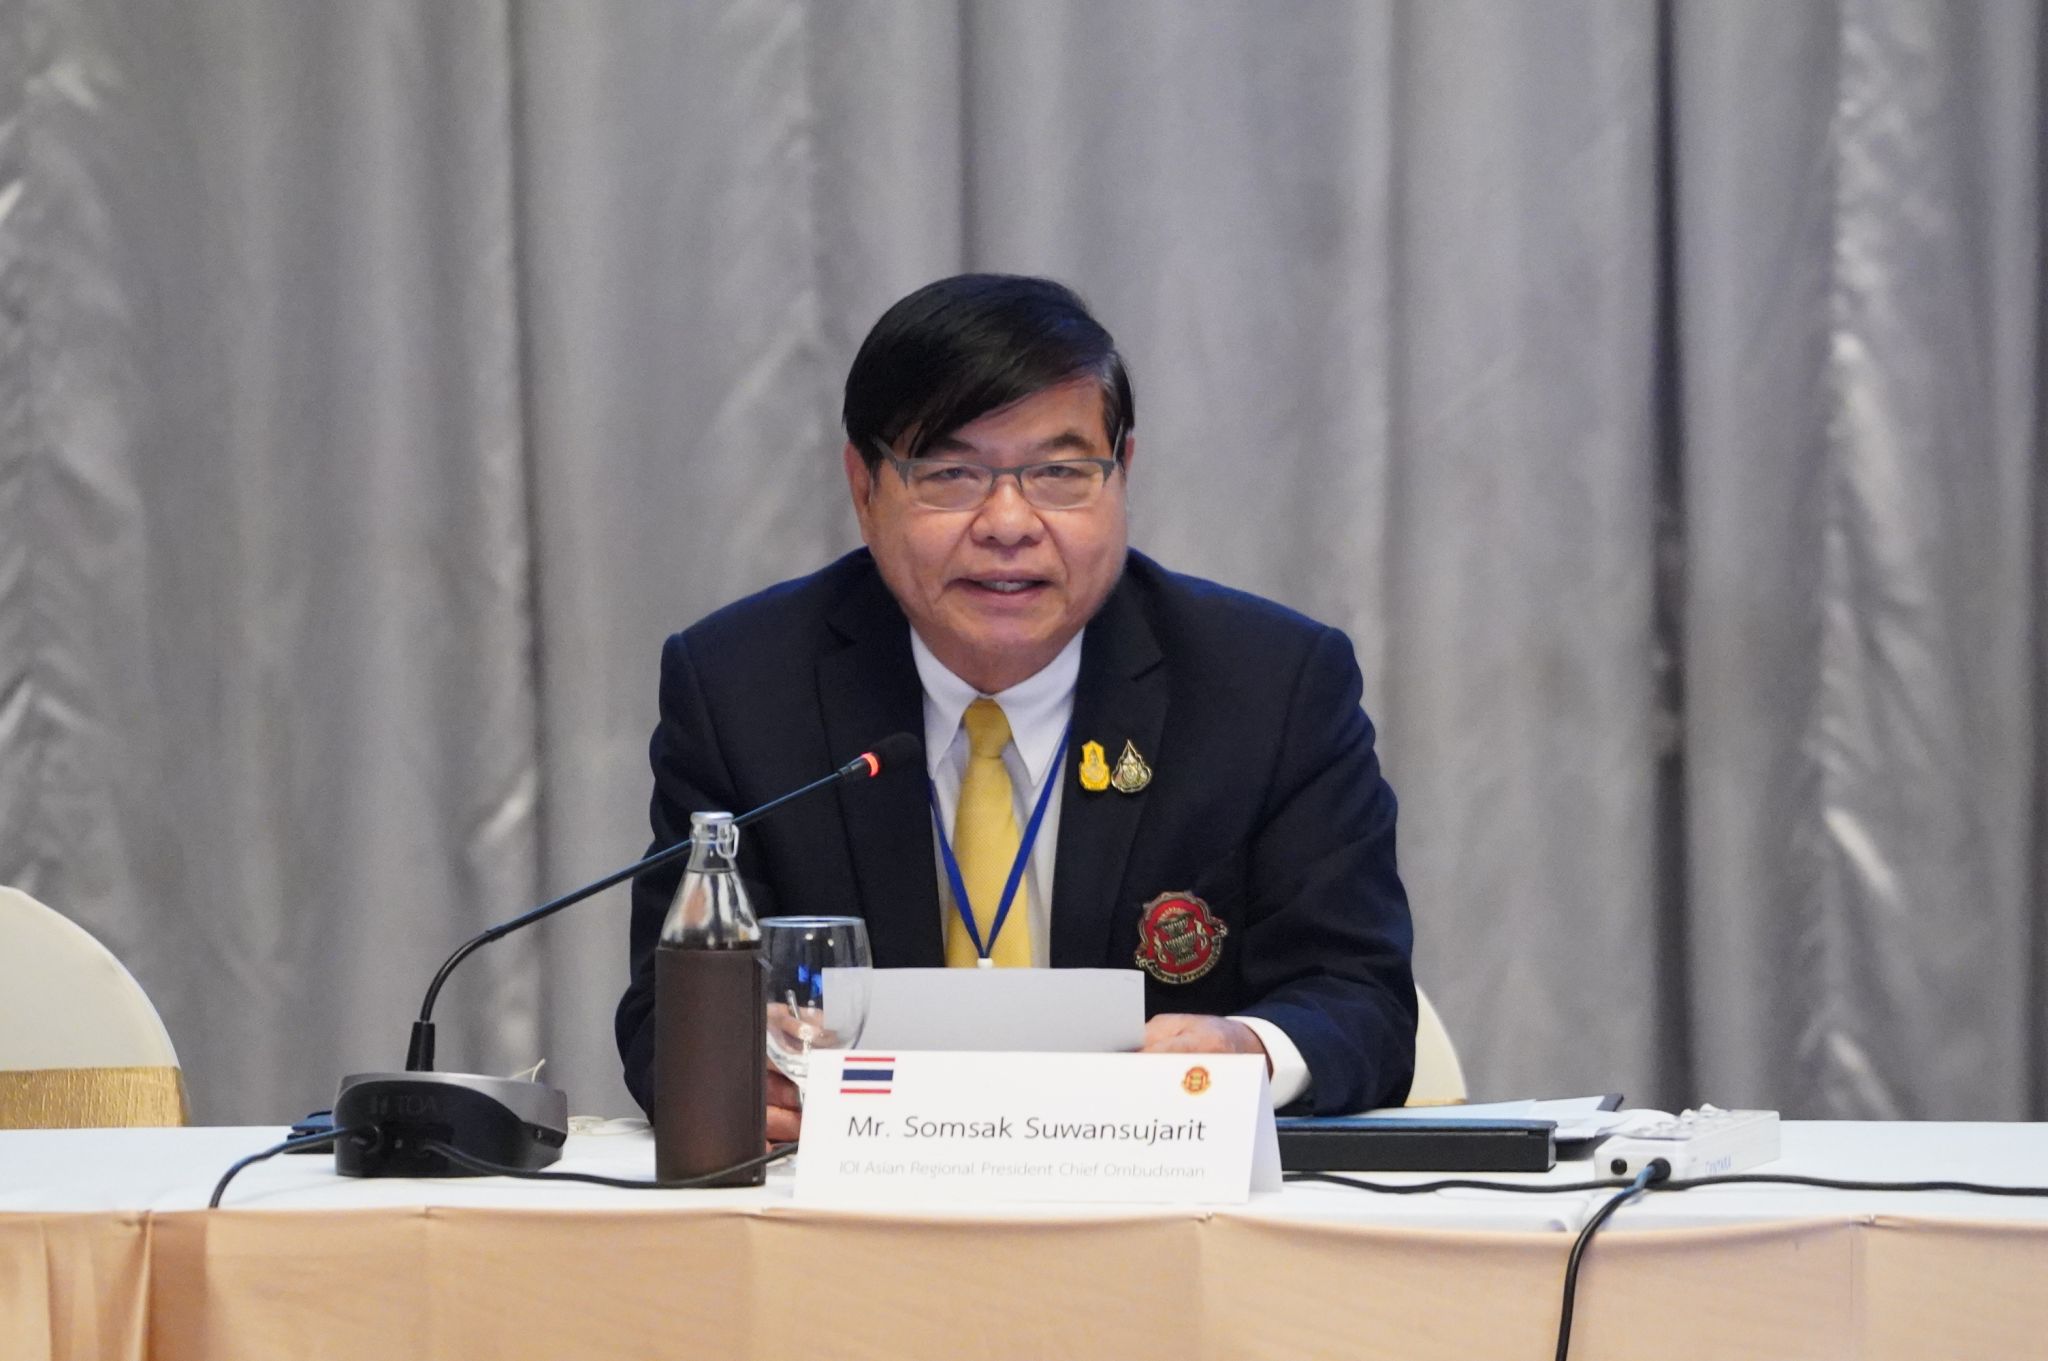 Chief Ombudsman of Thailand and Asia Region President, Somsak Suwansujarit